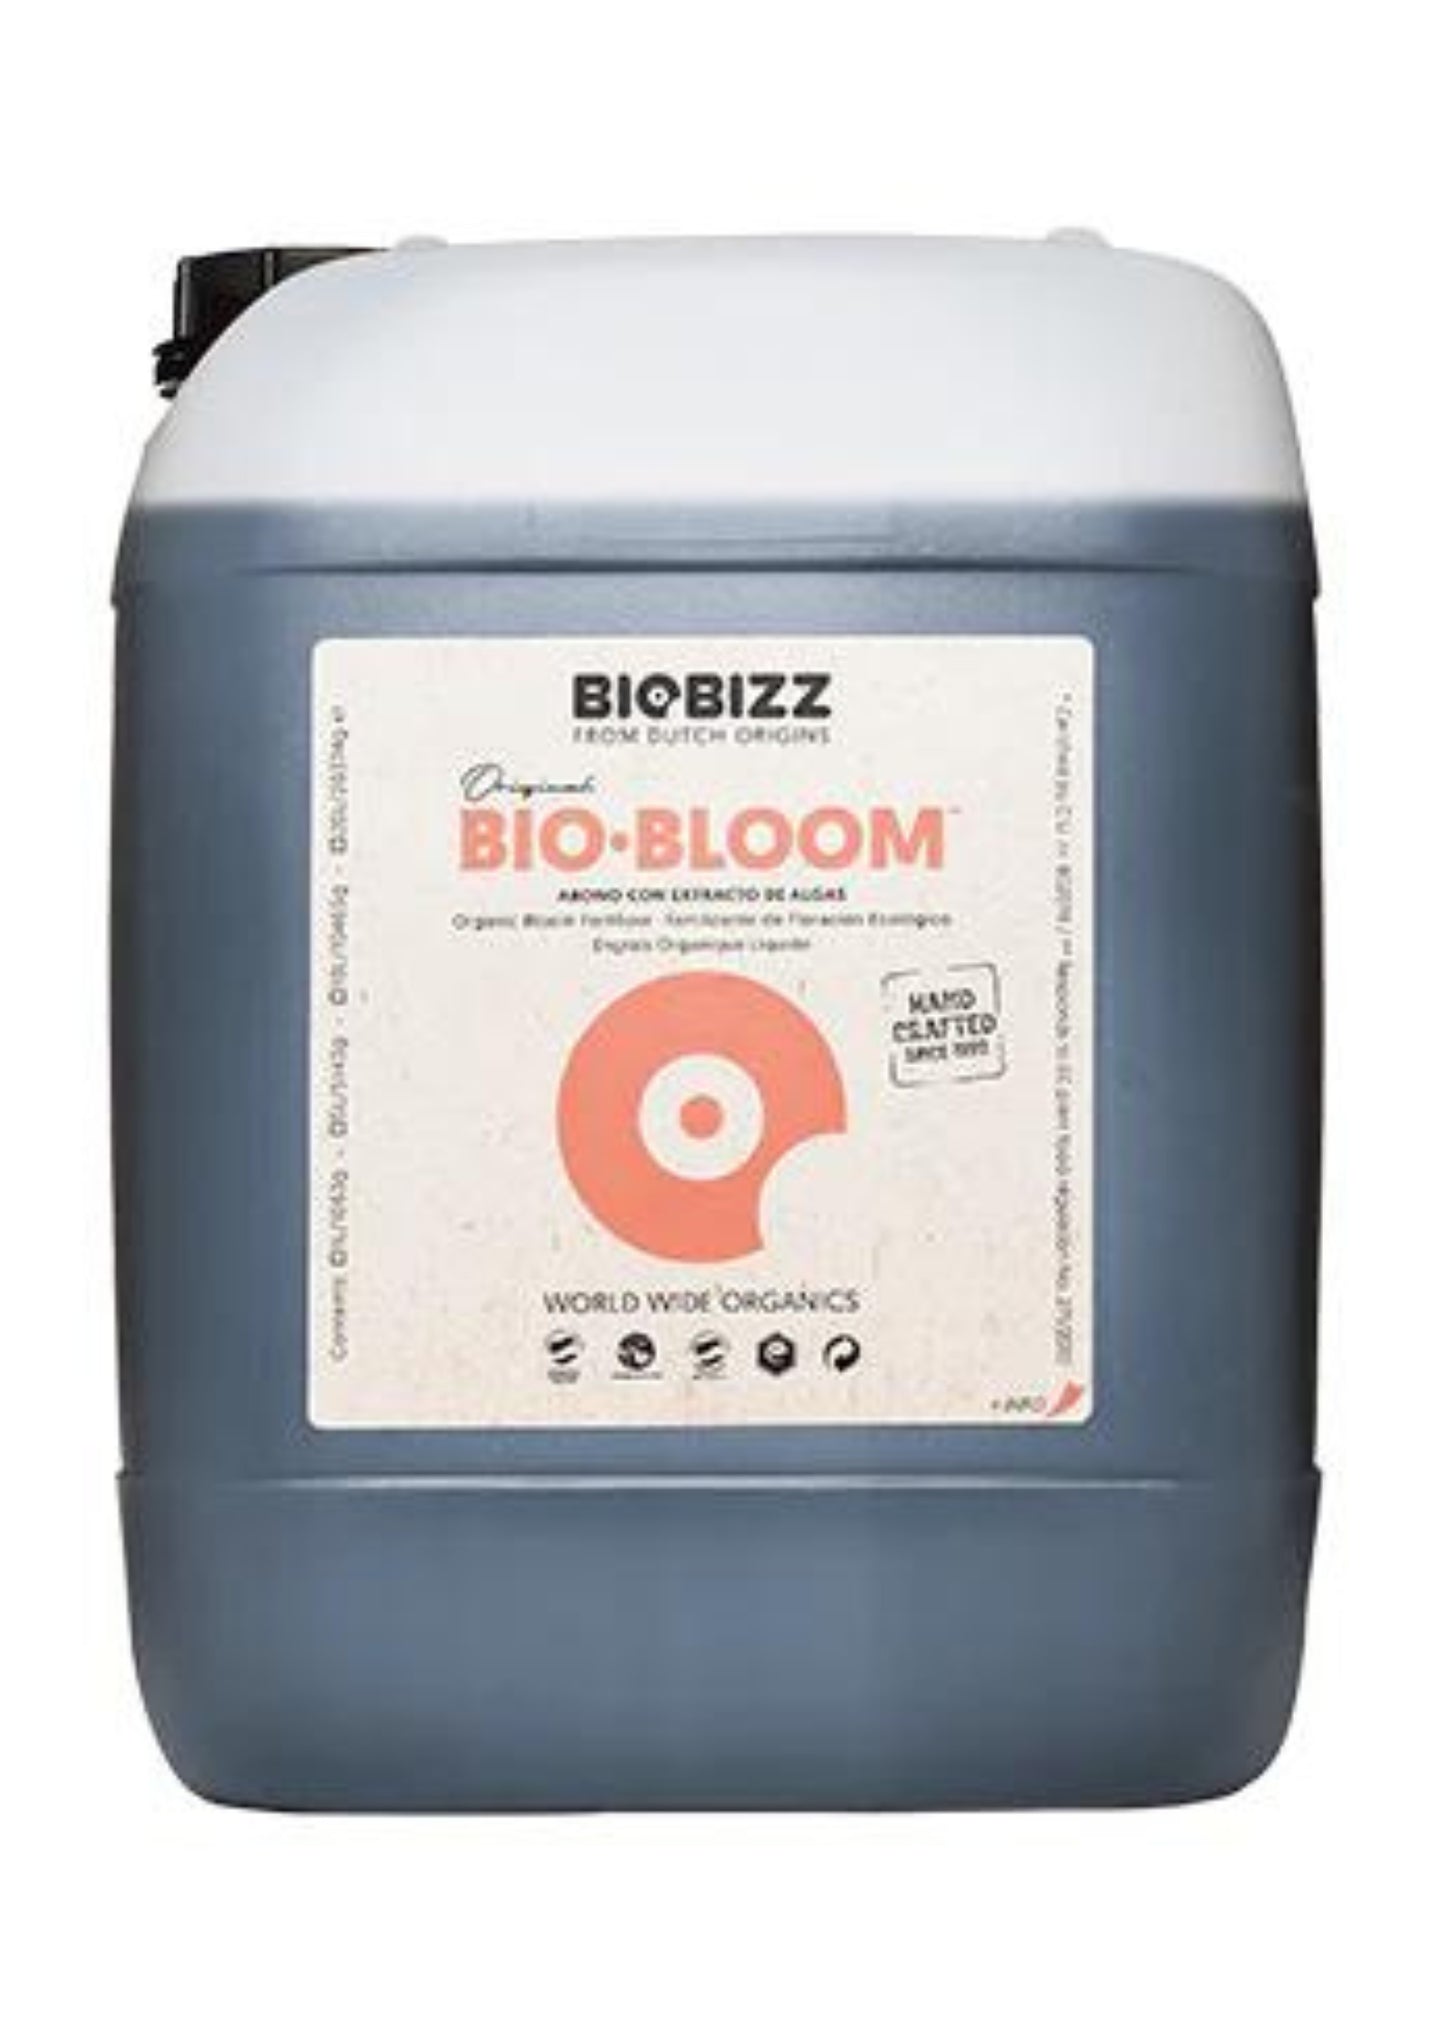 Bio Bloom Biobizz